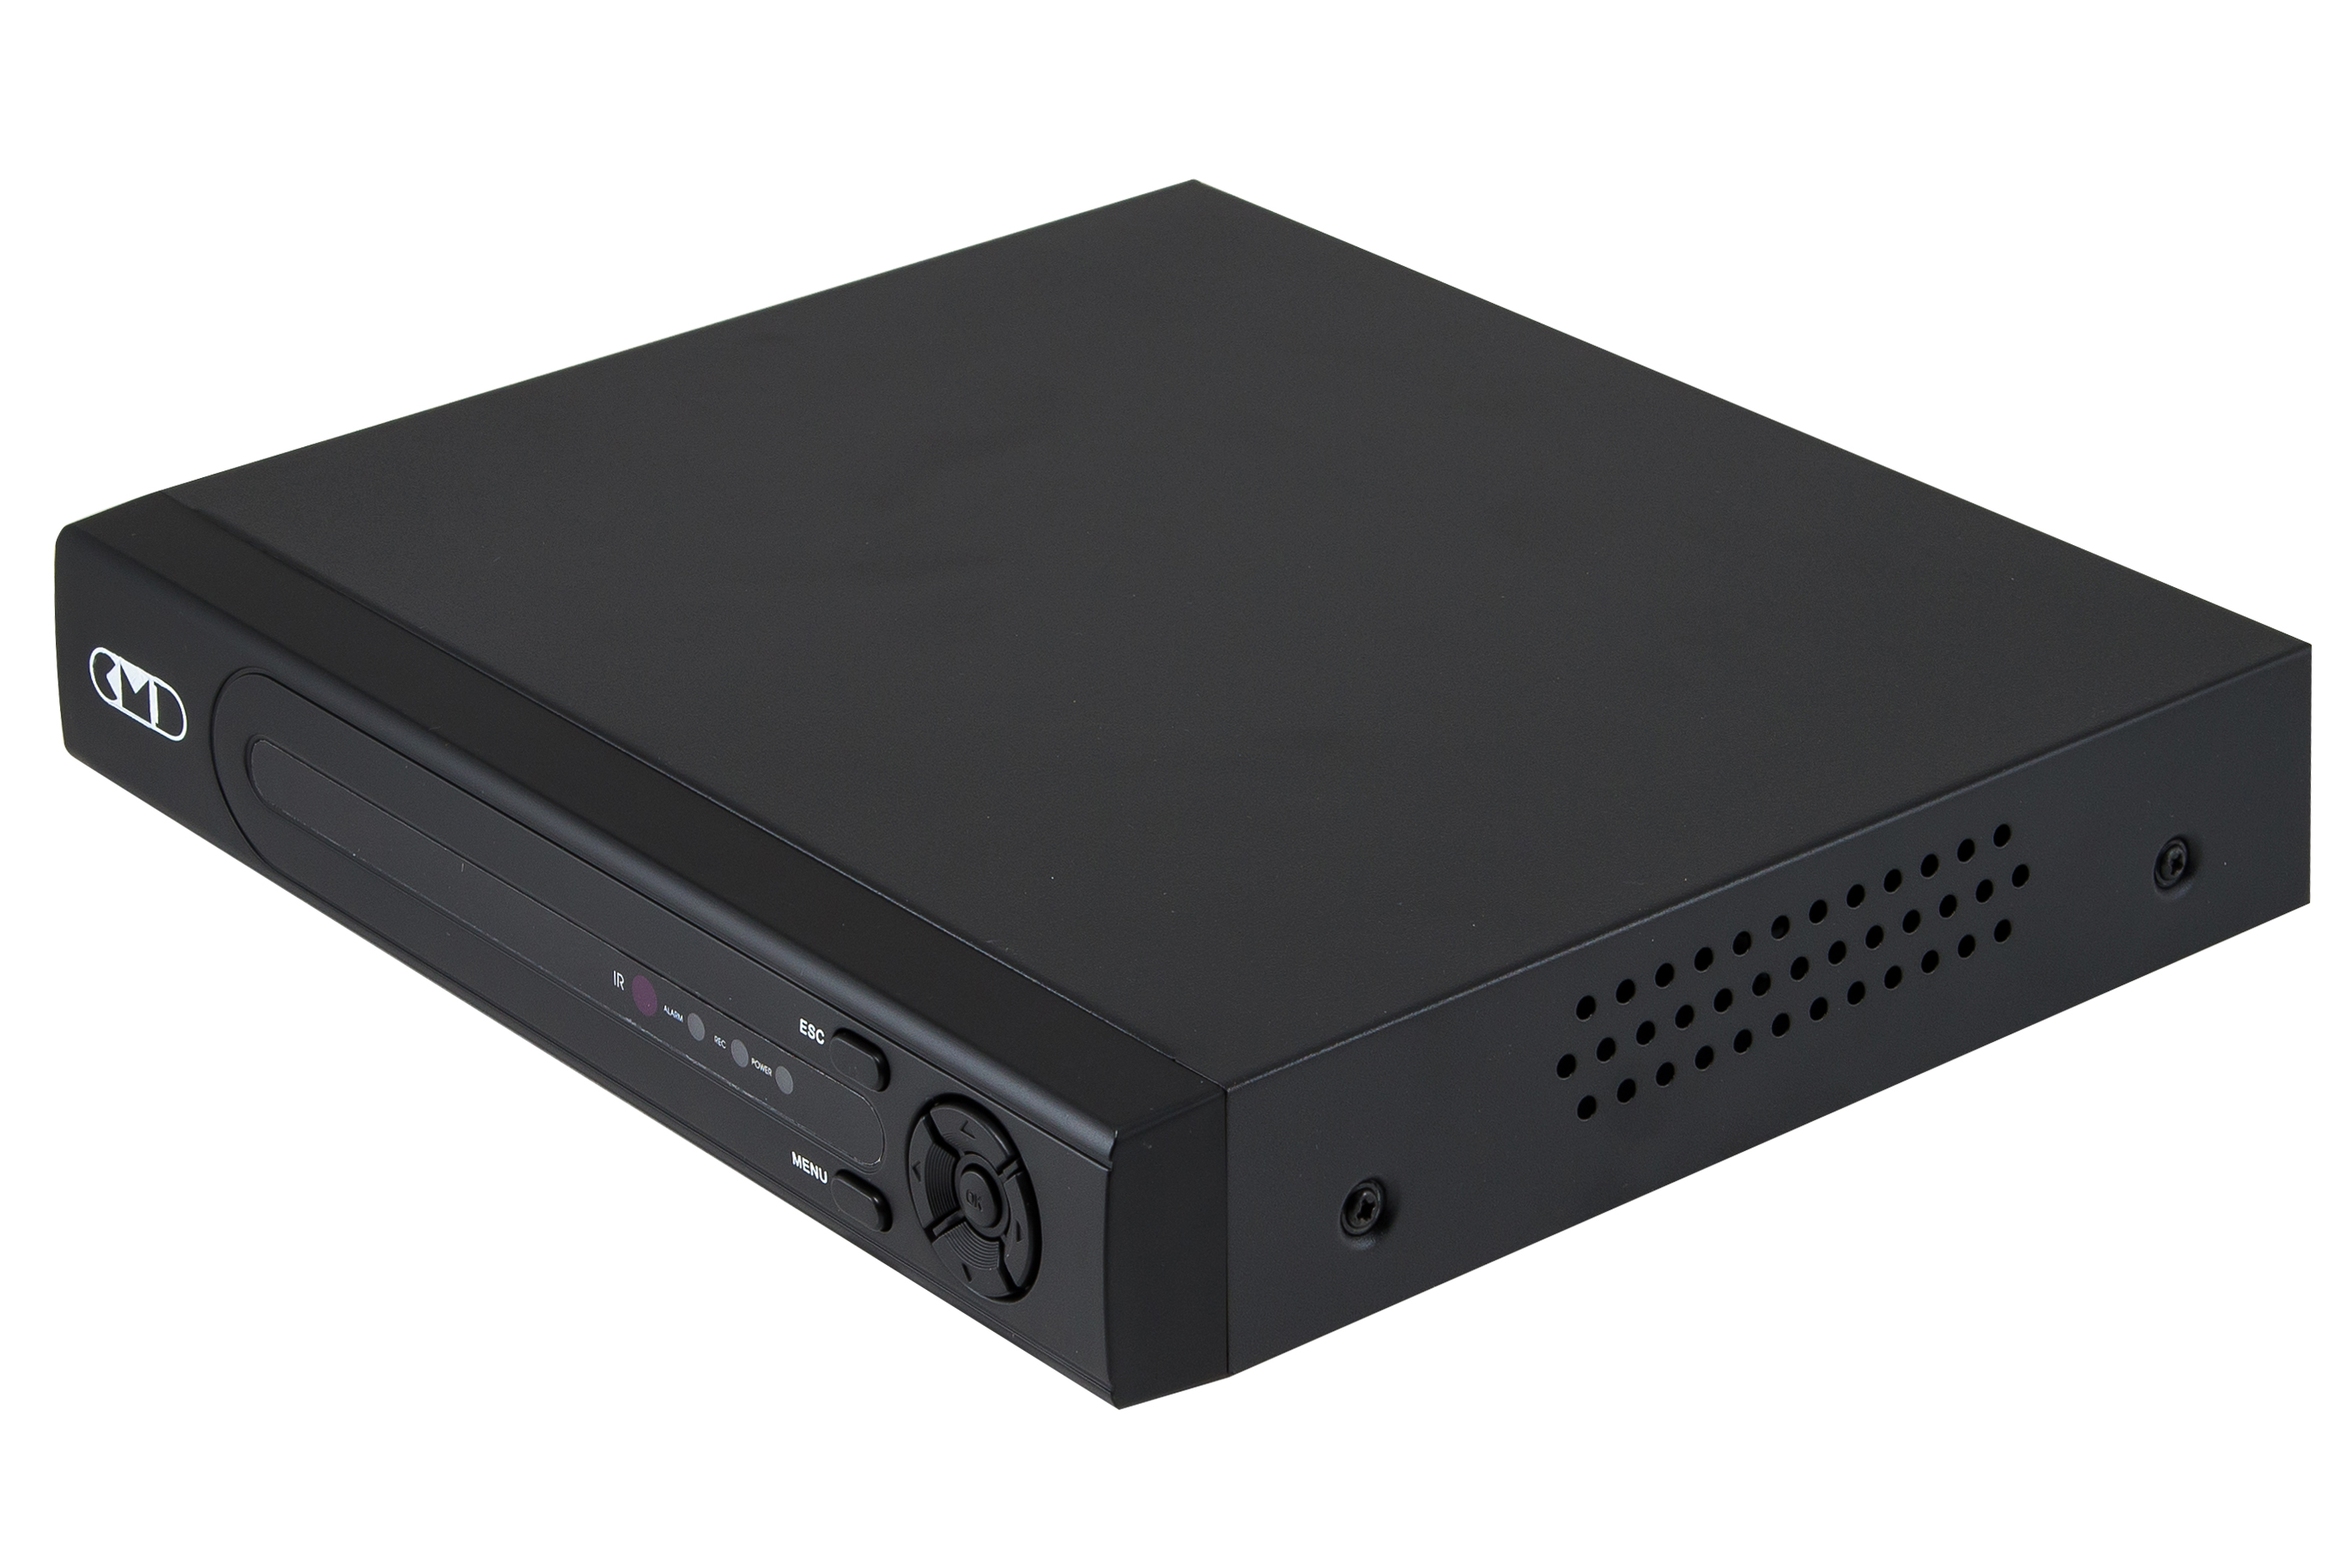  Элеком37. Гибридный AHD/IP/CVBS видеорегистратор на 8 каналов, 1080p CMD DVR-AHD2108L. Фото.